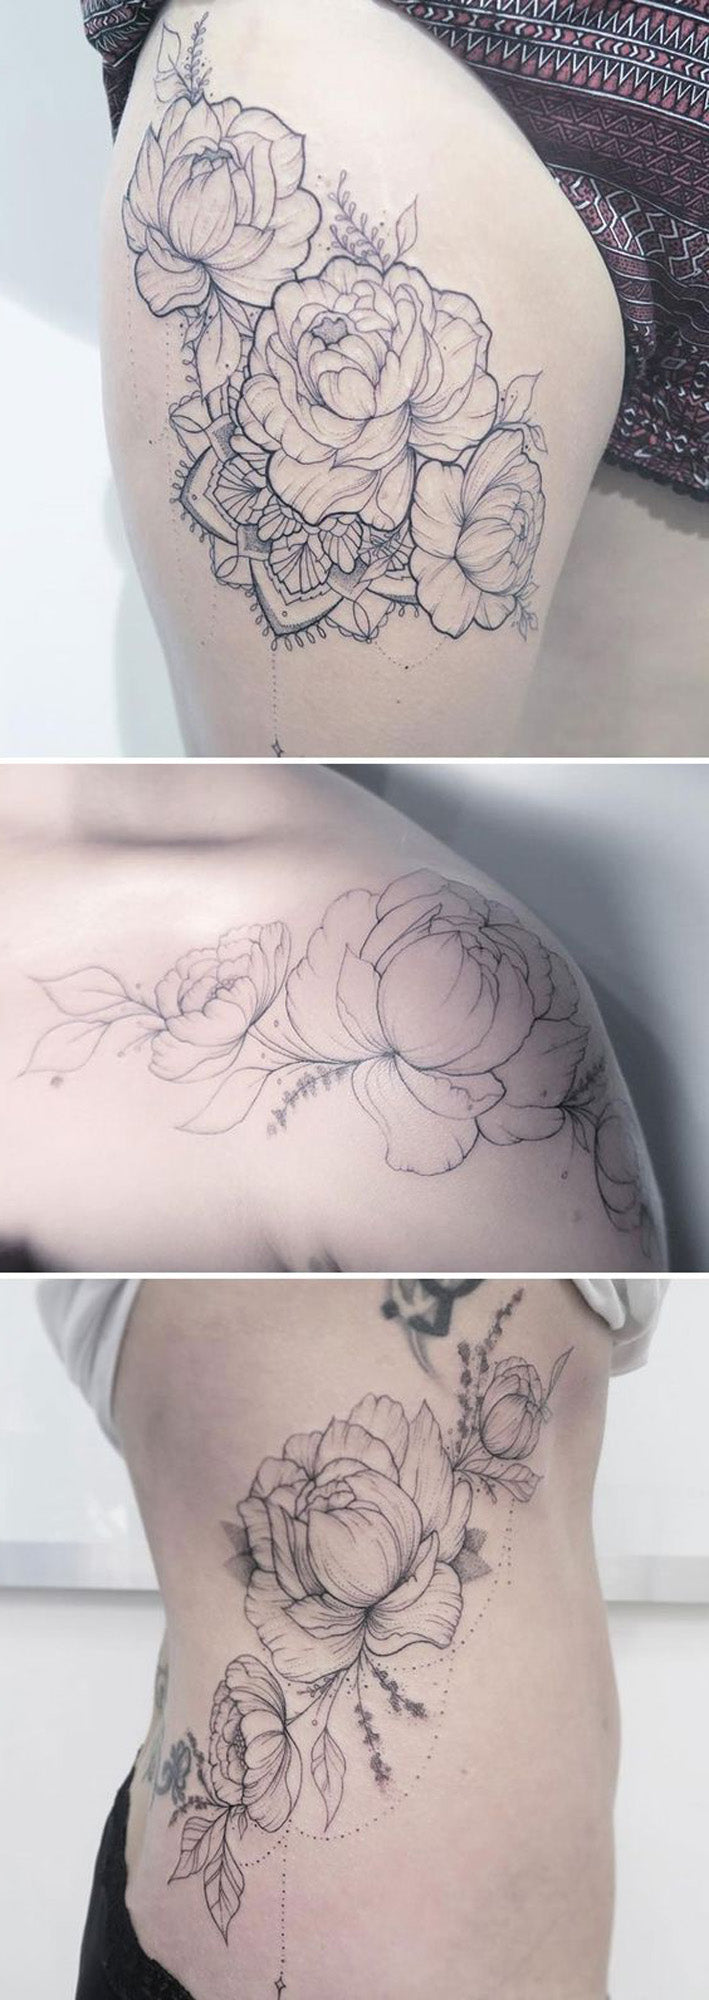 Delicate Peony Outline Drawing Tattoo Ideas for Women Floral Flower Thigh Rib Shoulder Tattoos -  ideas delicadas del tatuaje de la peonía para las mujeres - www.MyBodiArt.com